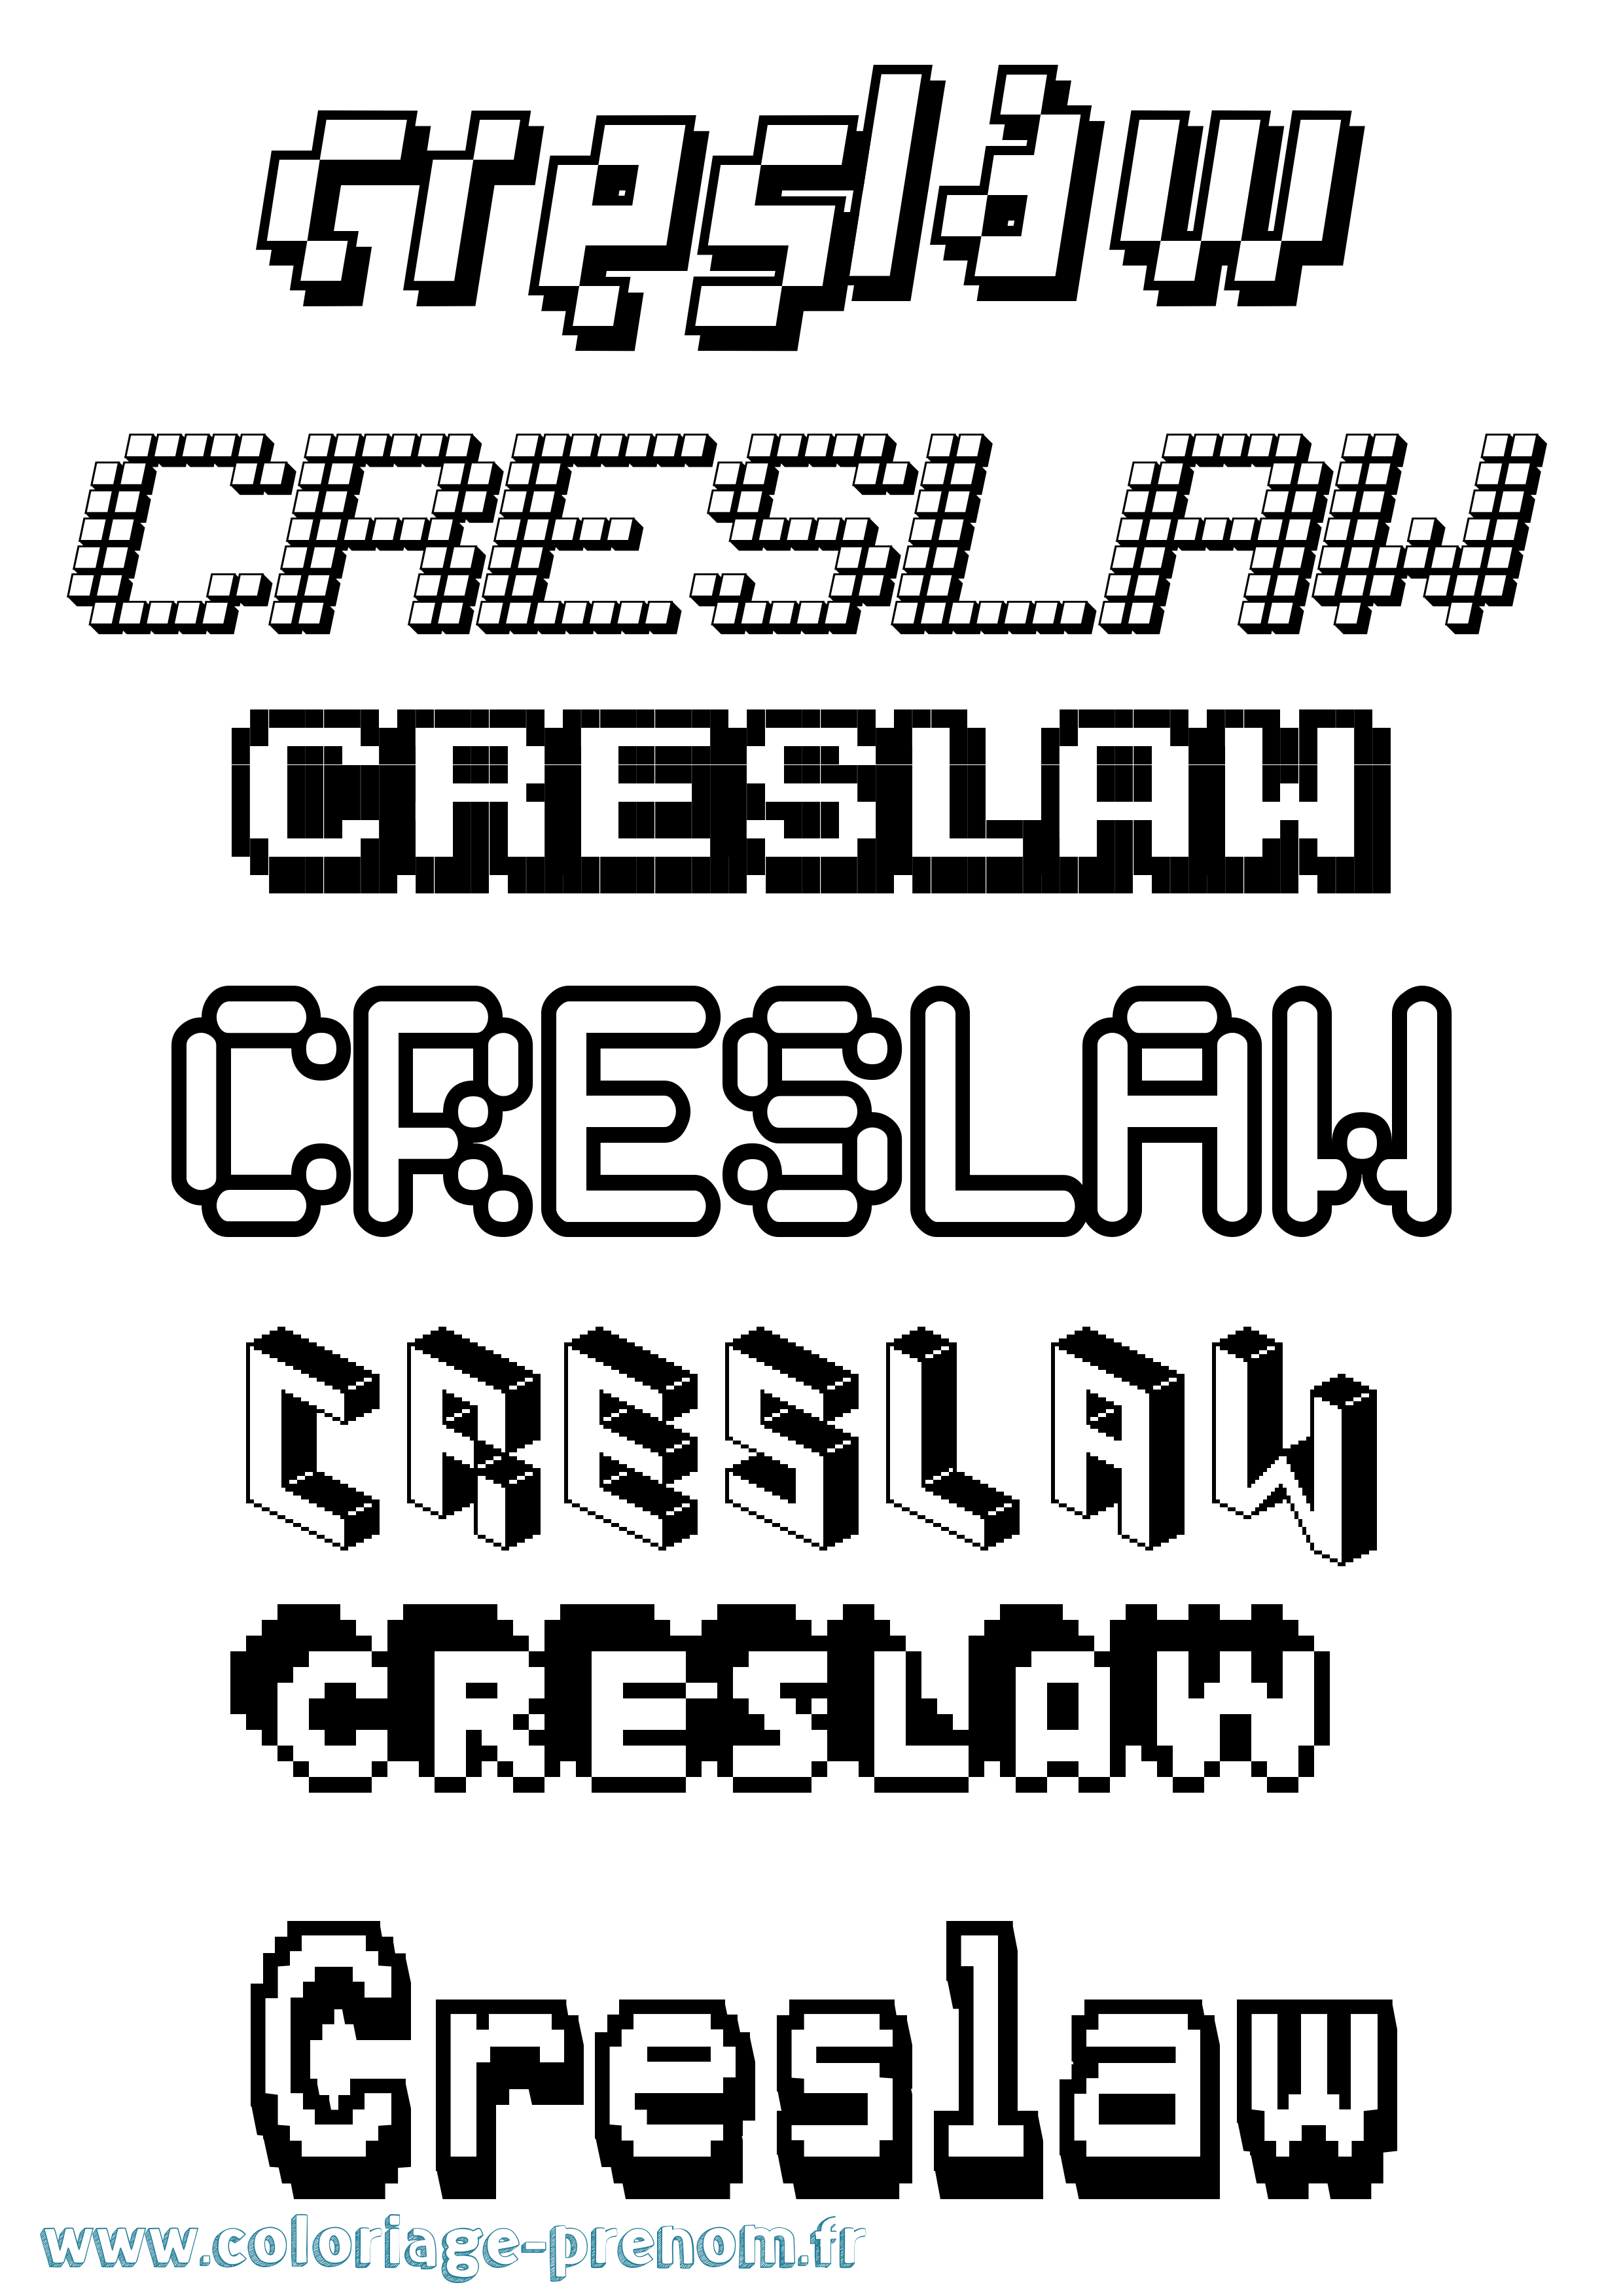 Coloriage prénom Creslaw Pixel